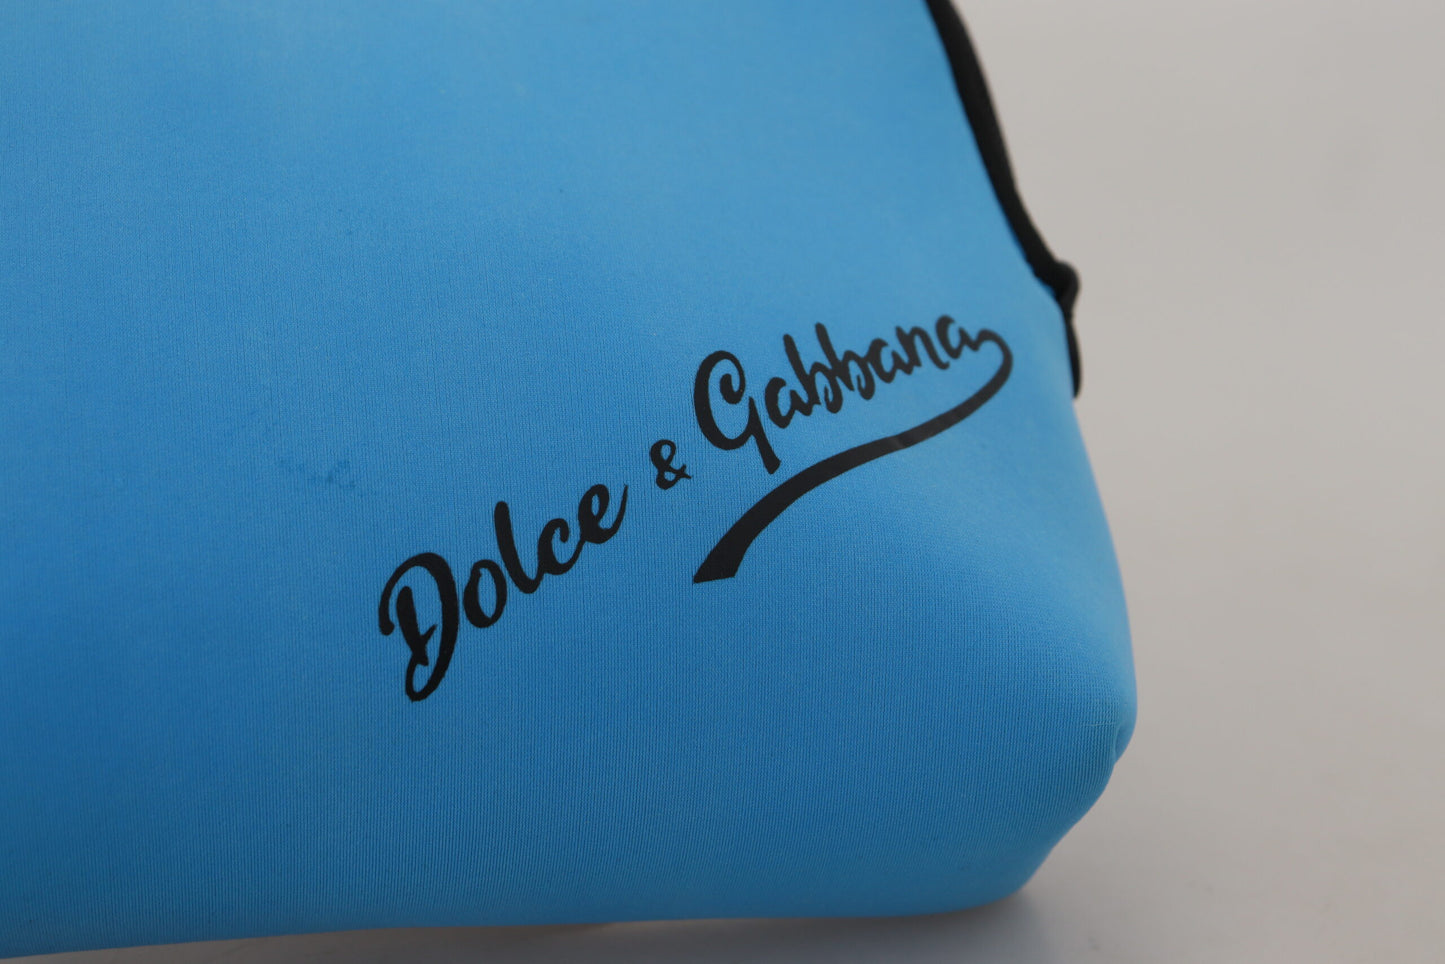 Dolce & Gabbana Women's Blue Logo Print Hand Pouch Leopard Print Toiletry Bag